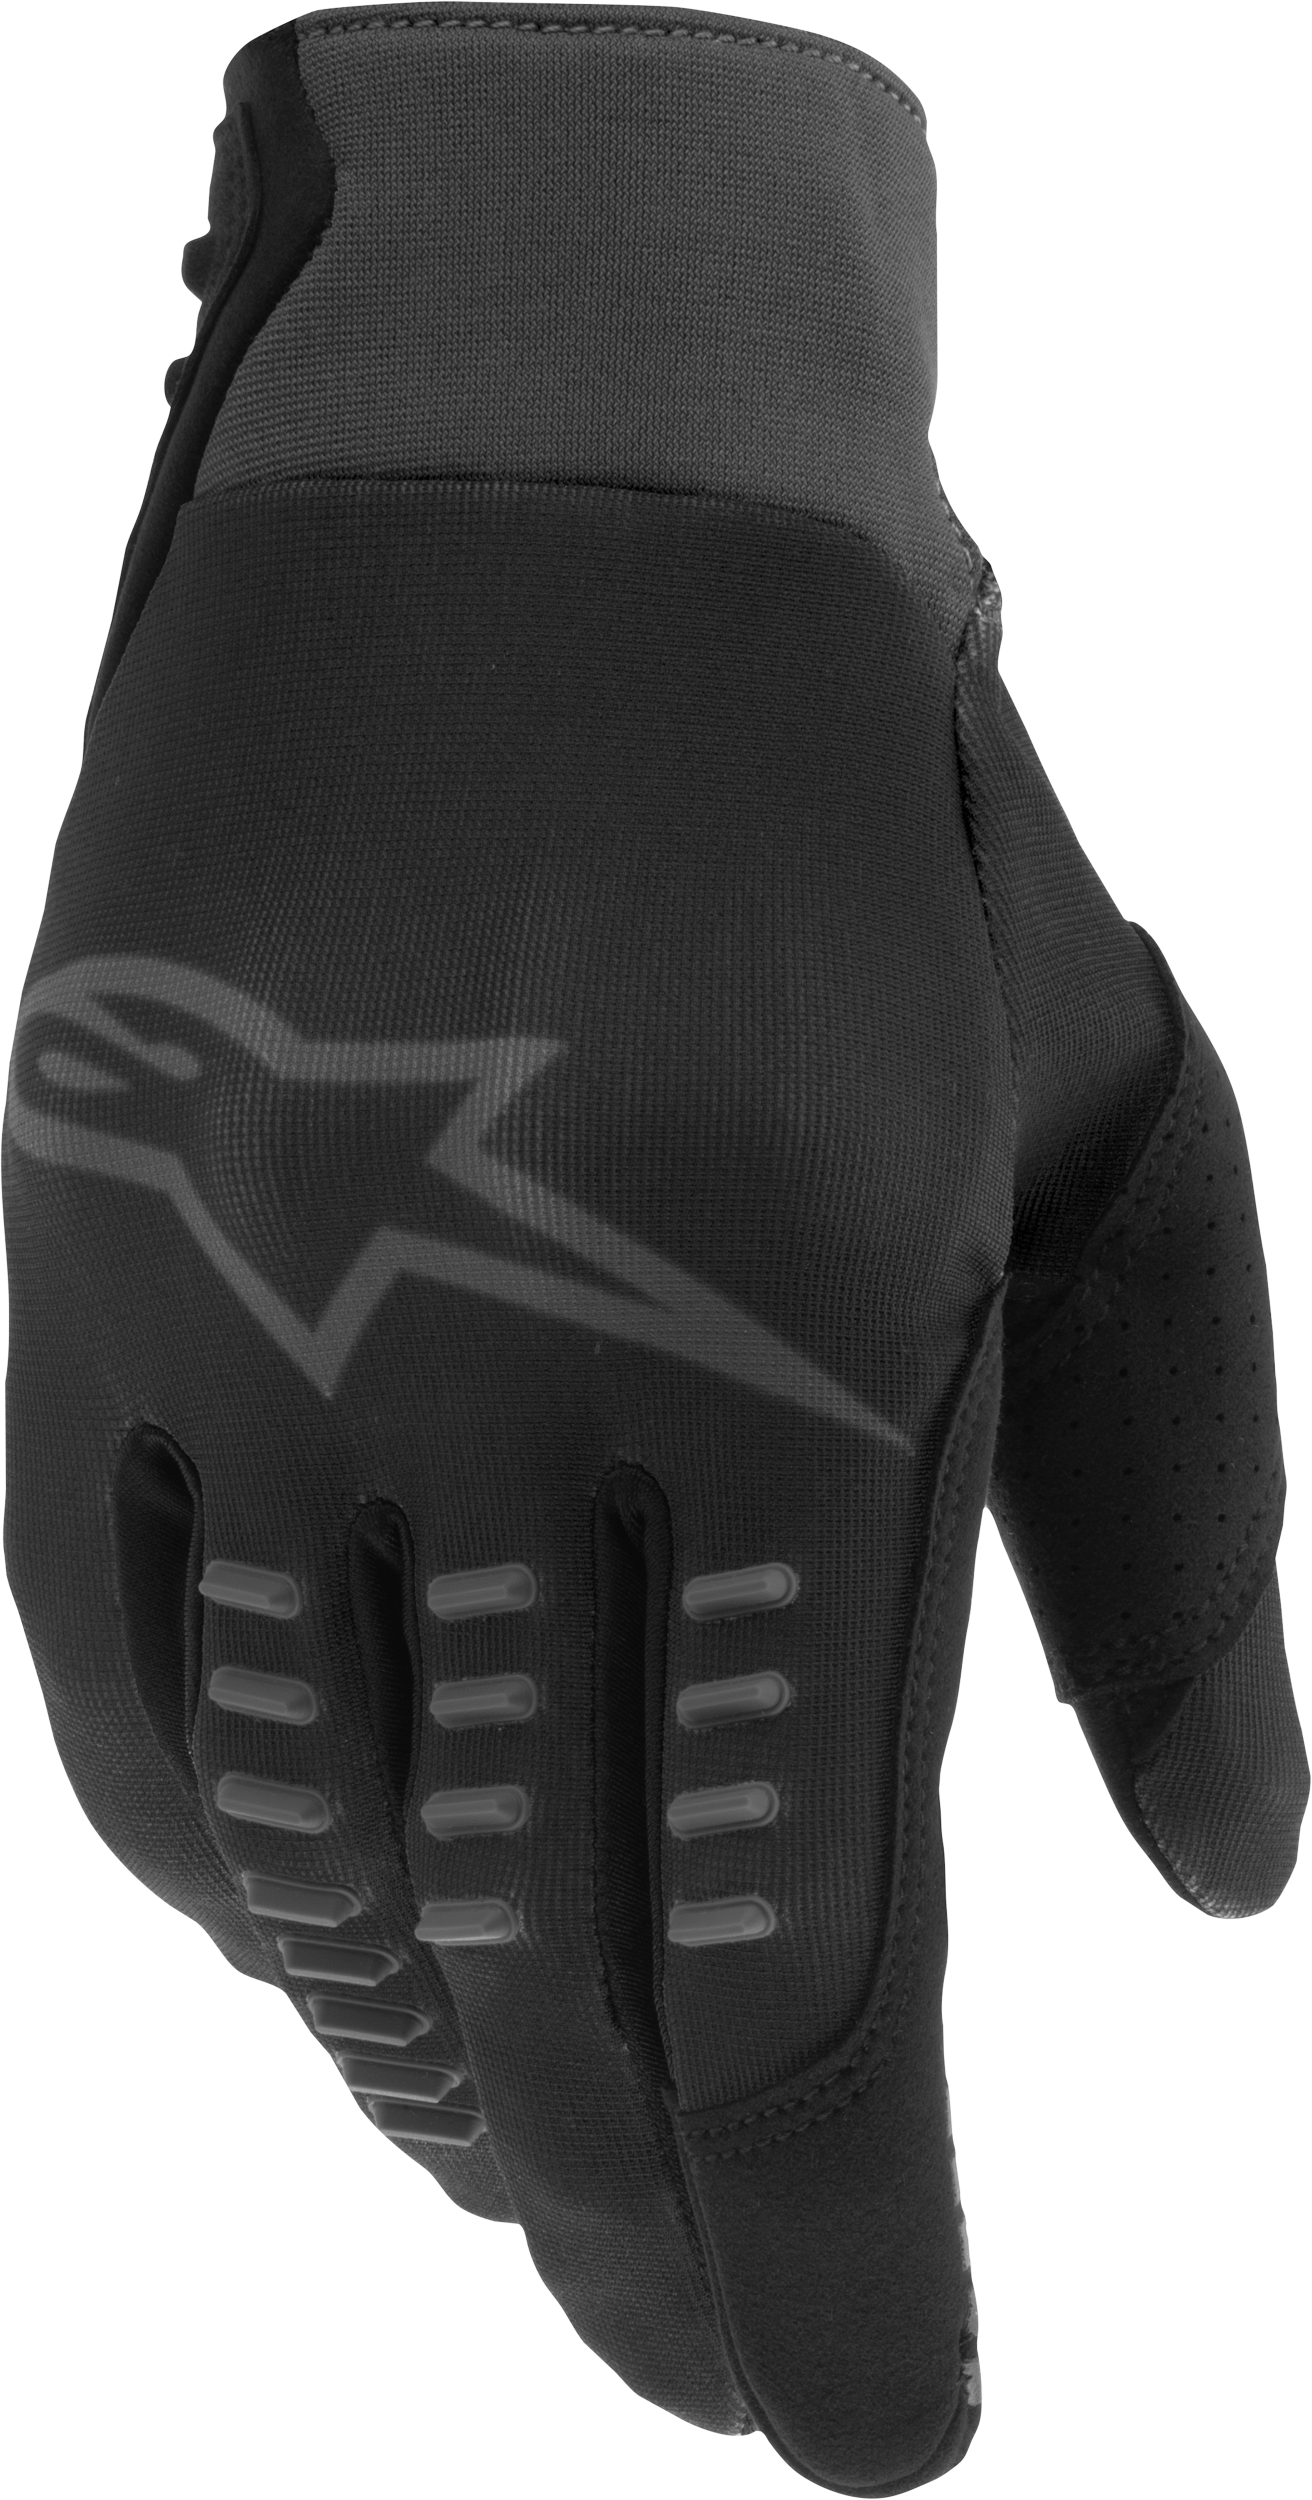 Alpinestars Smx-E Gloves Black/Black Medium 3564020-1100-M